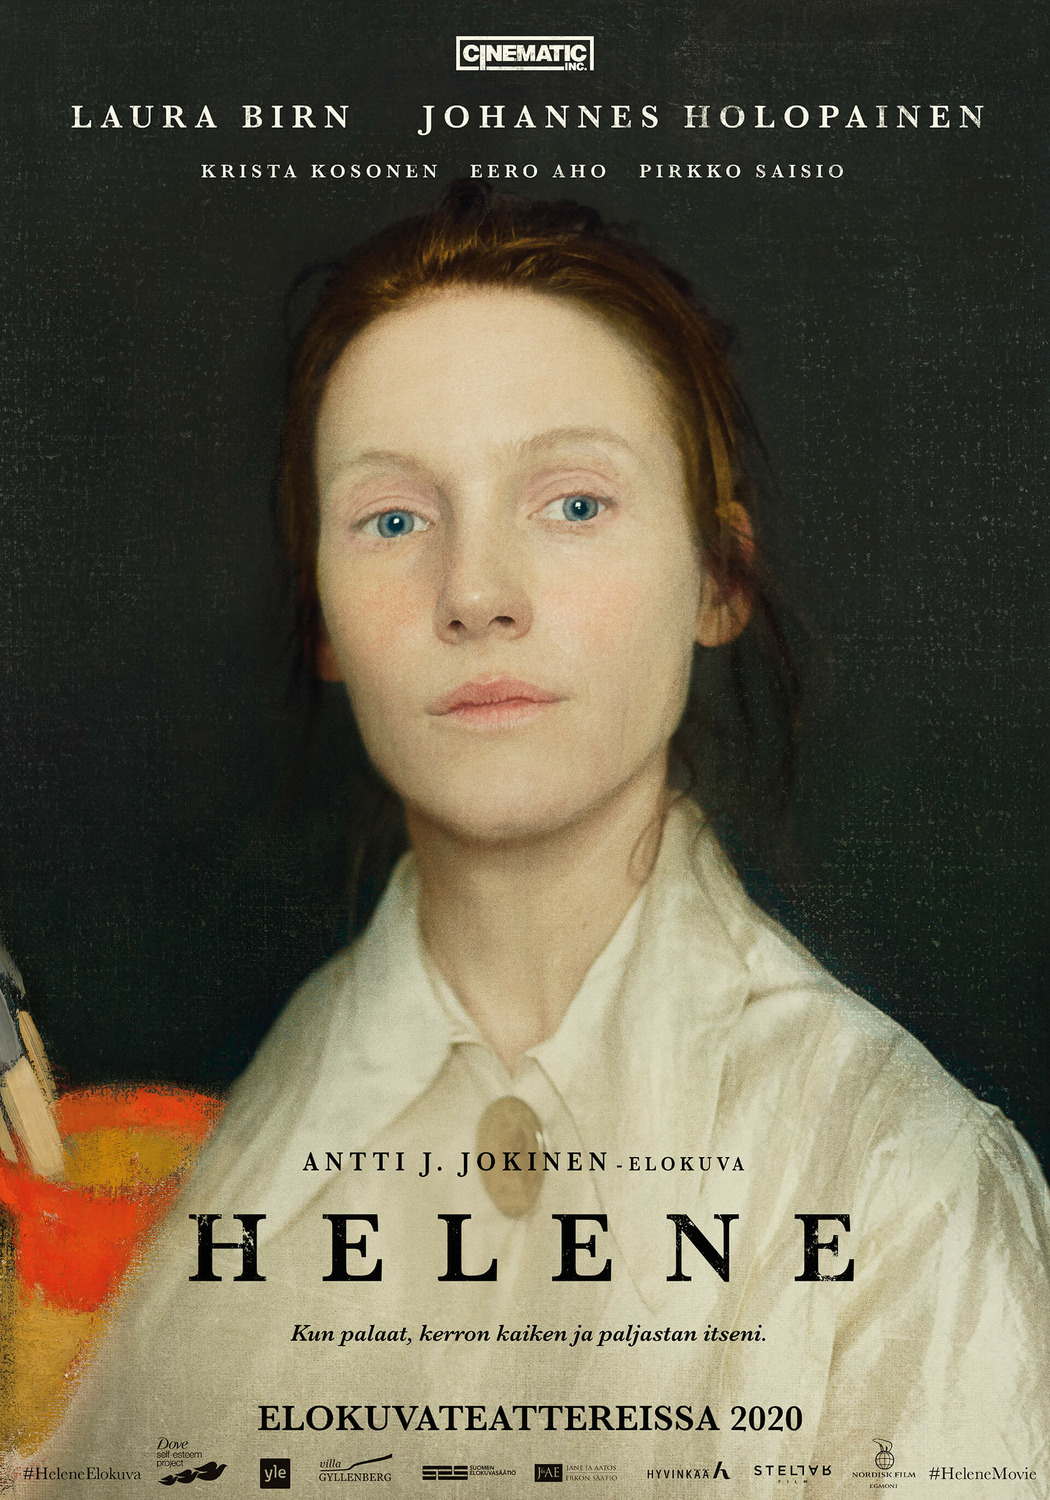 Extra Large Movie Poster Image for Helene 